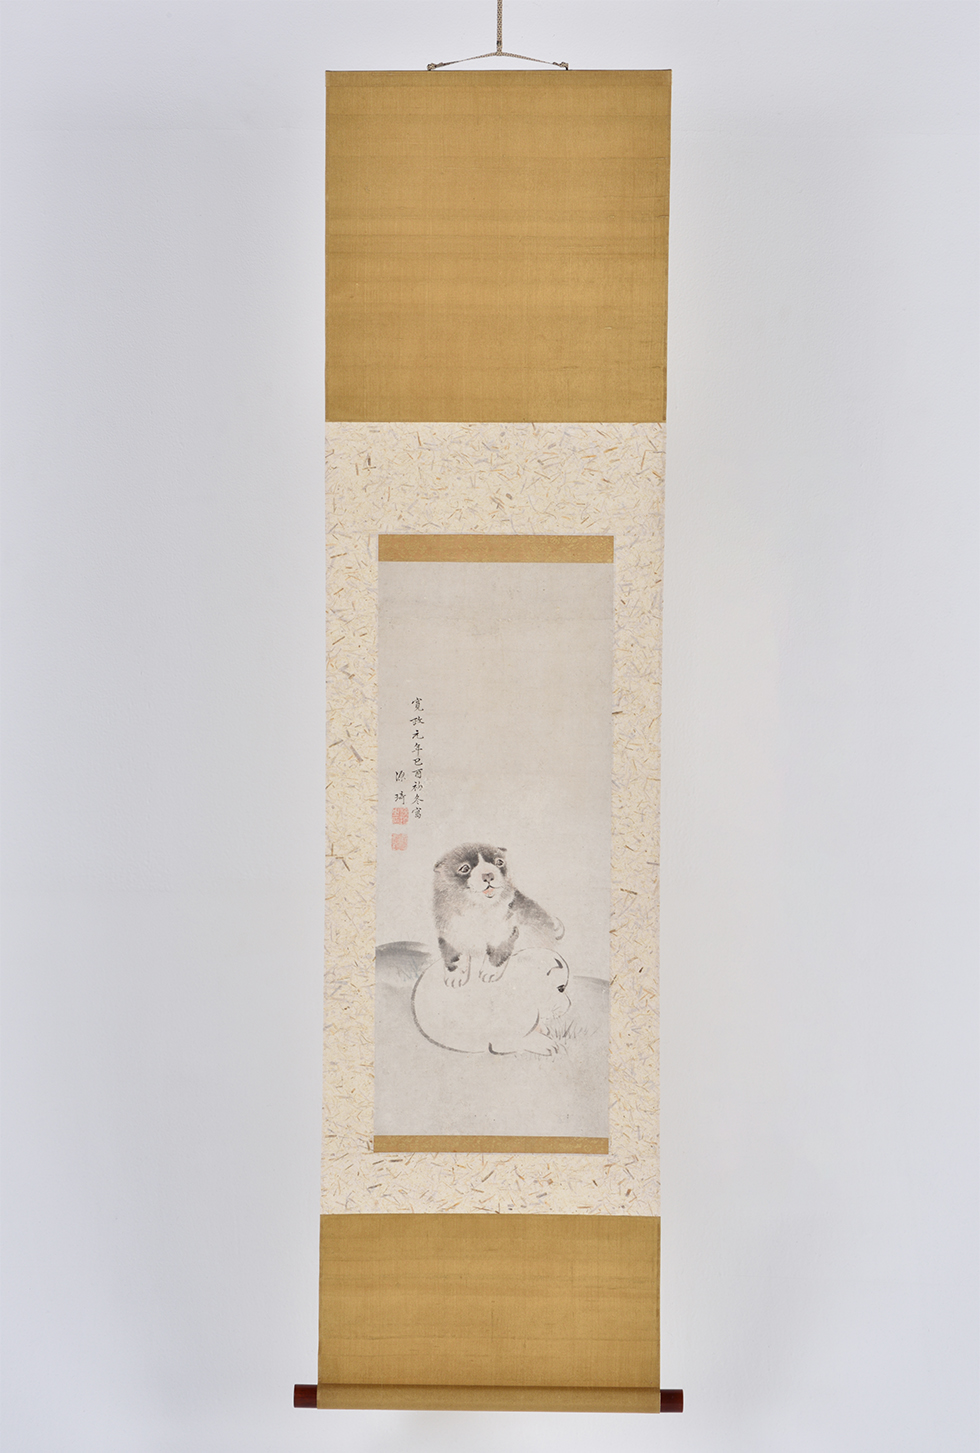 Hanging scroll “Puppies” painted by Komai Genki (1747 – 1797)